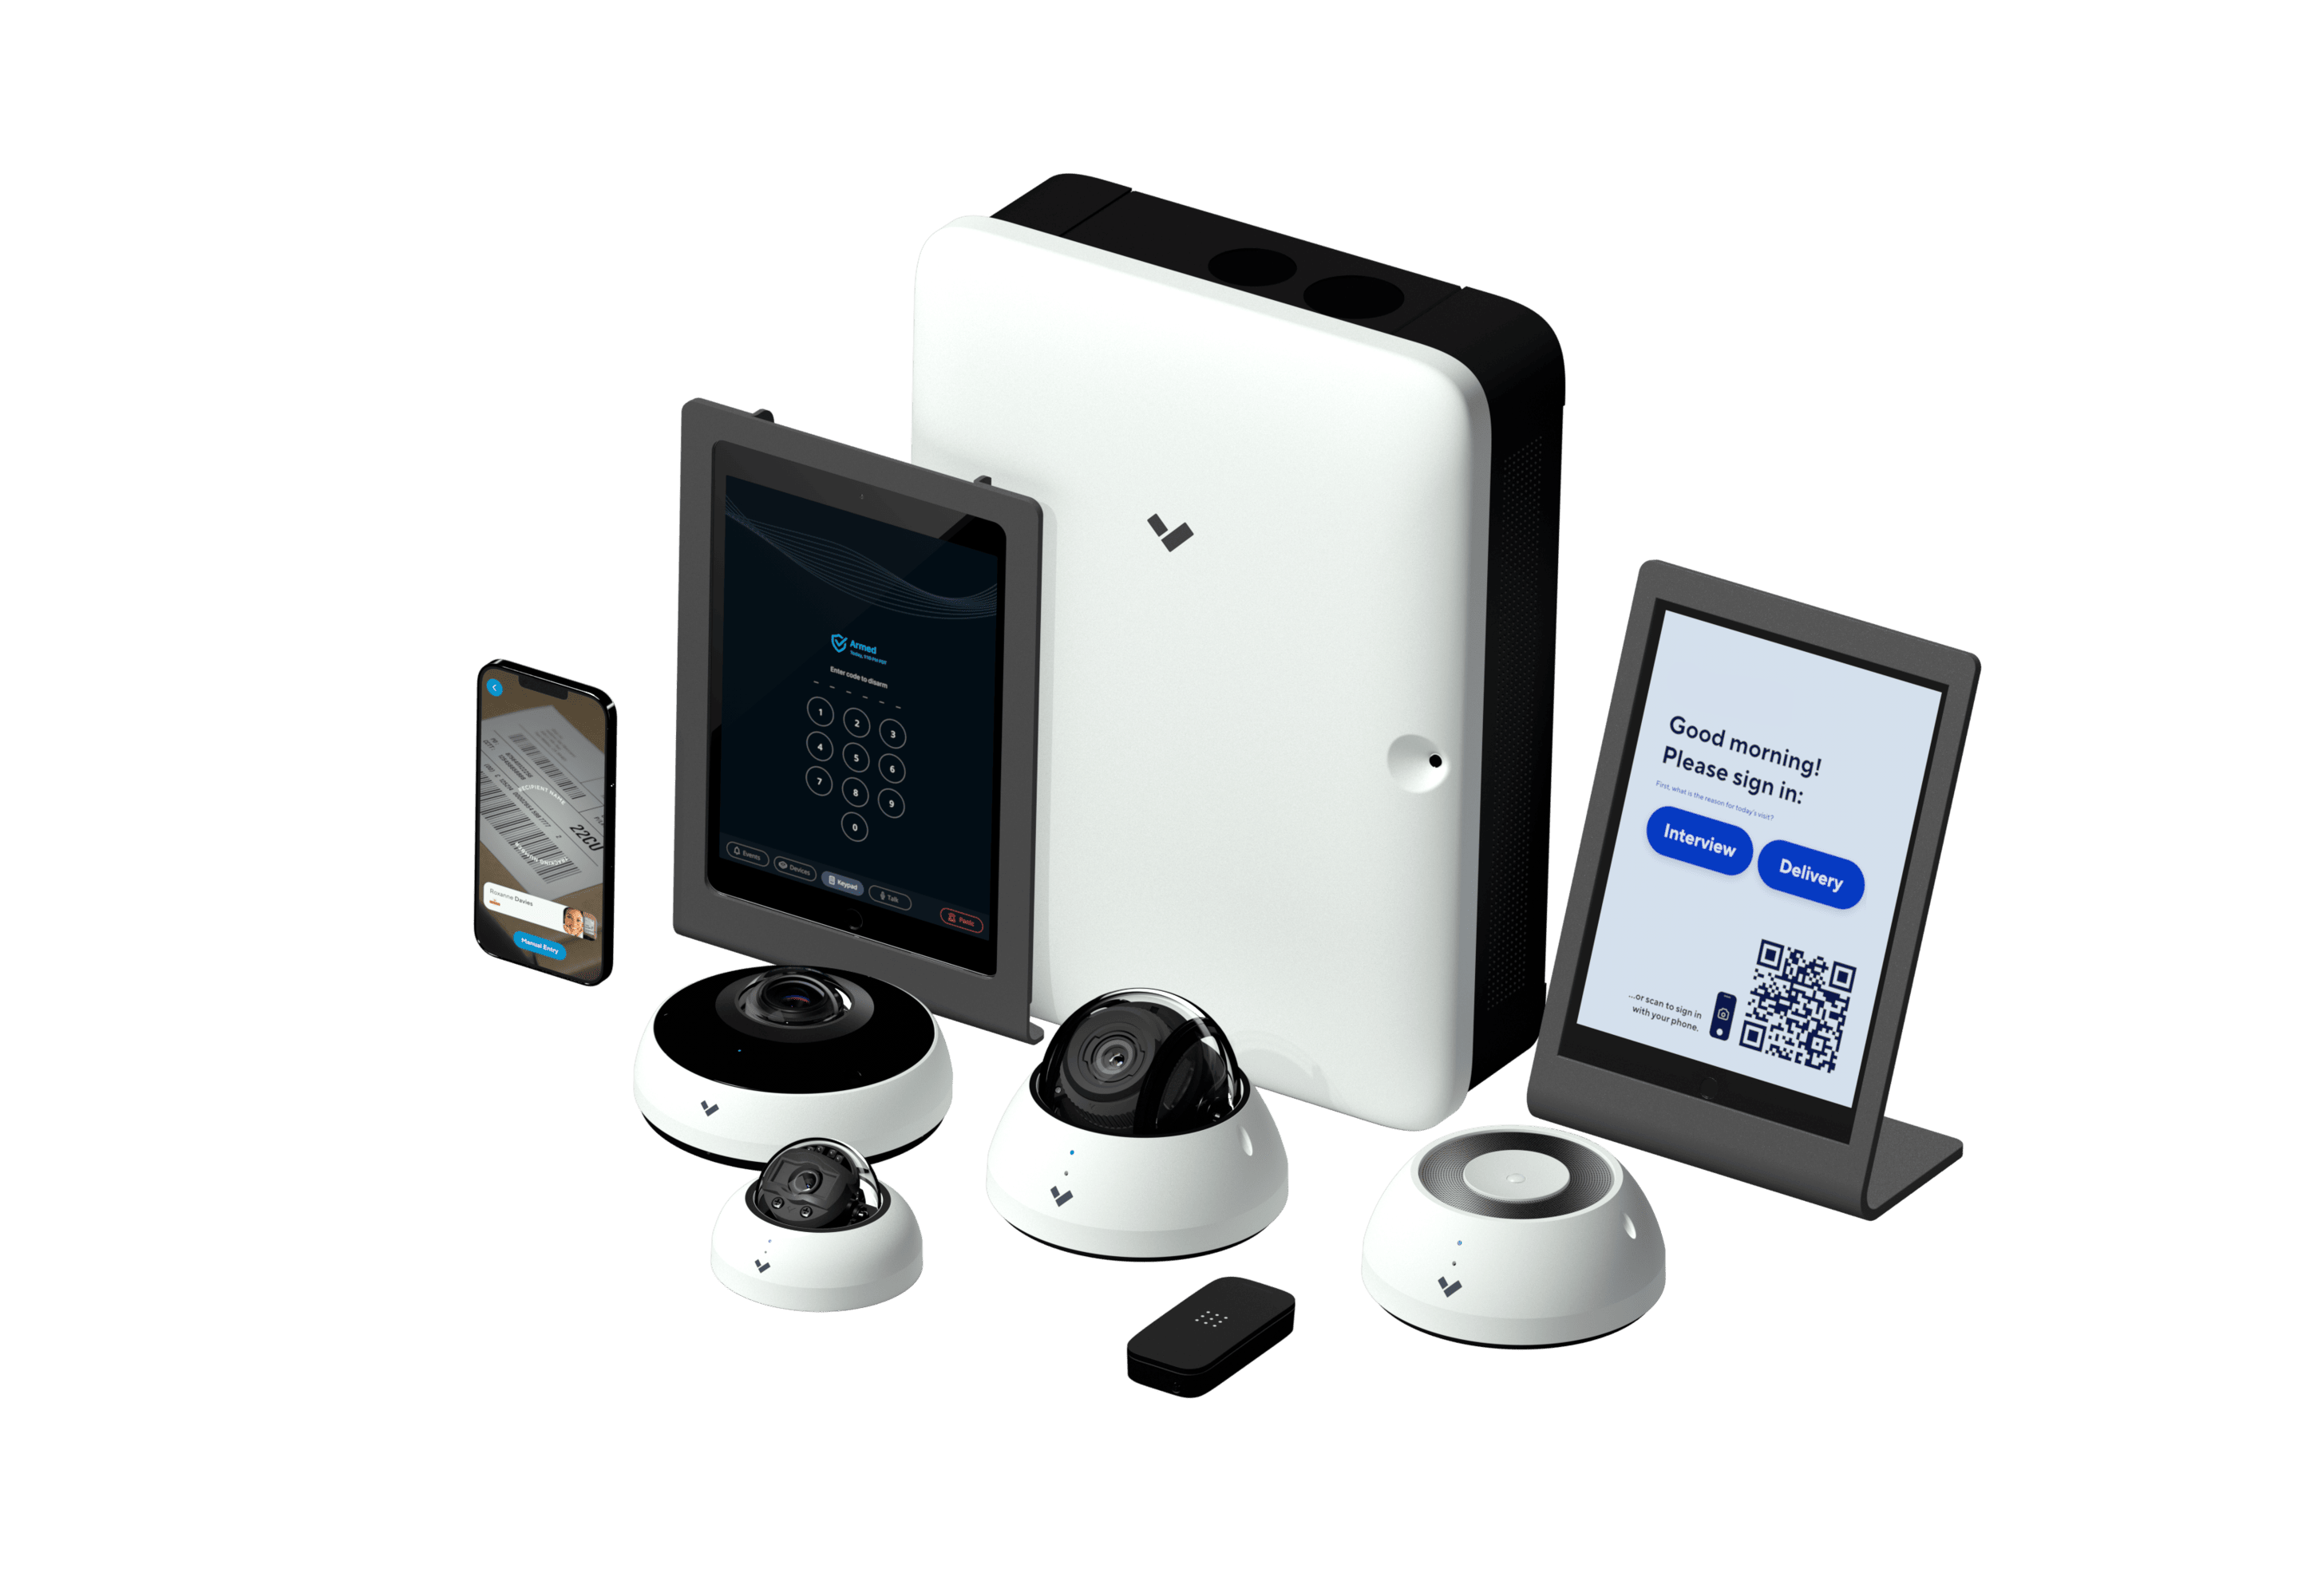 Verkada Device Family used in 16 camera wireless security system